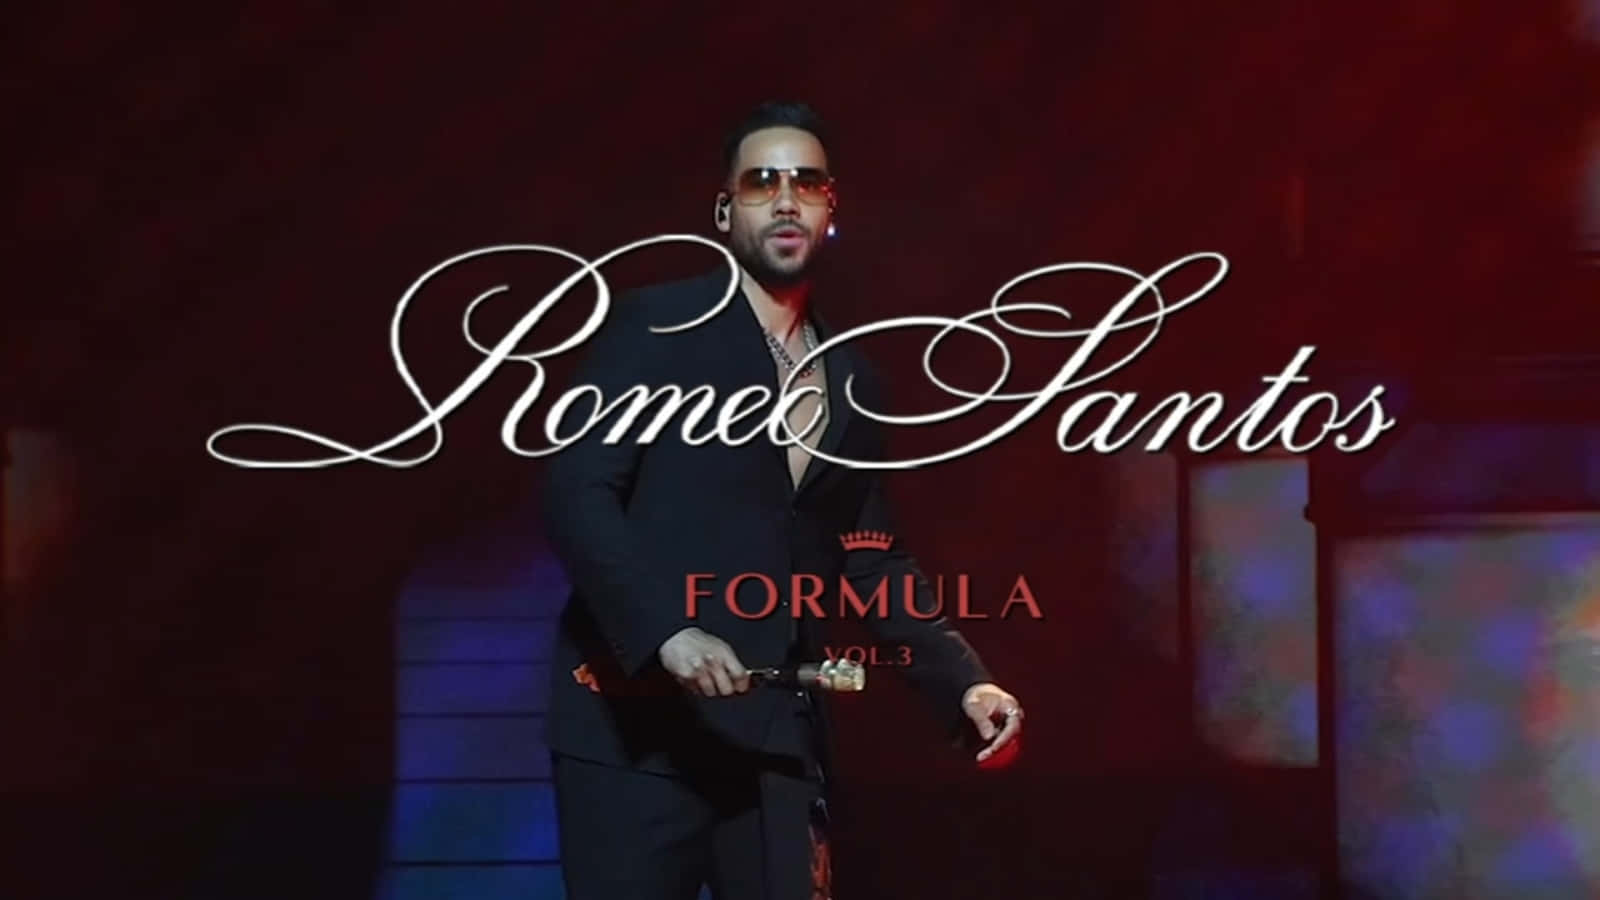 Romeo Santos Formula Vol3 Promotion Wallpaper